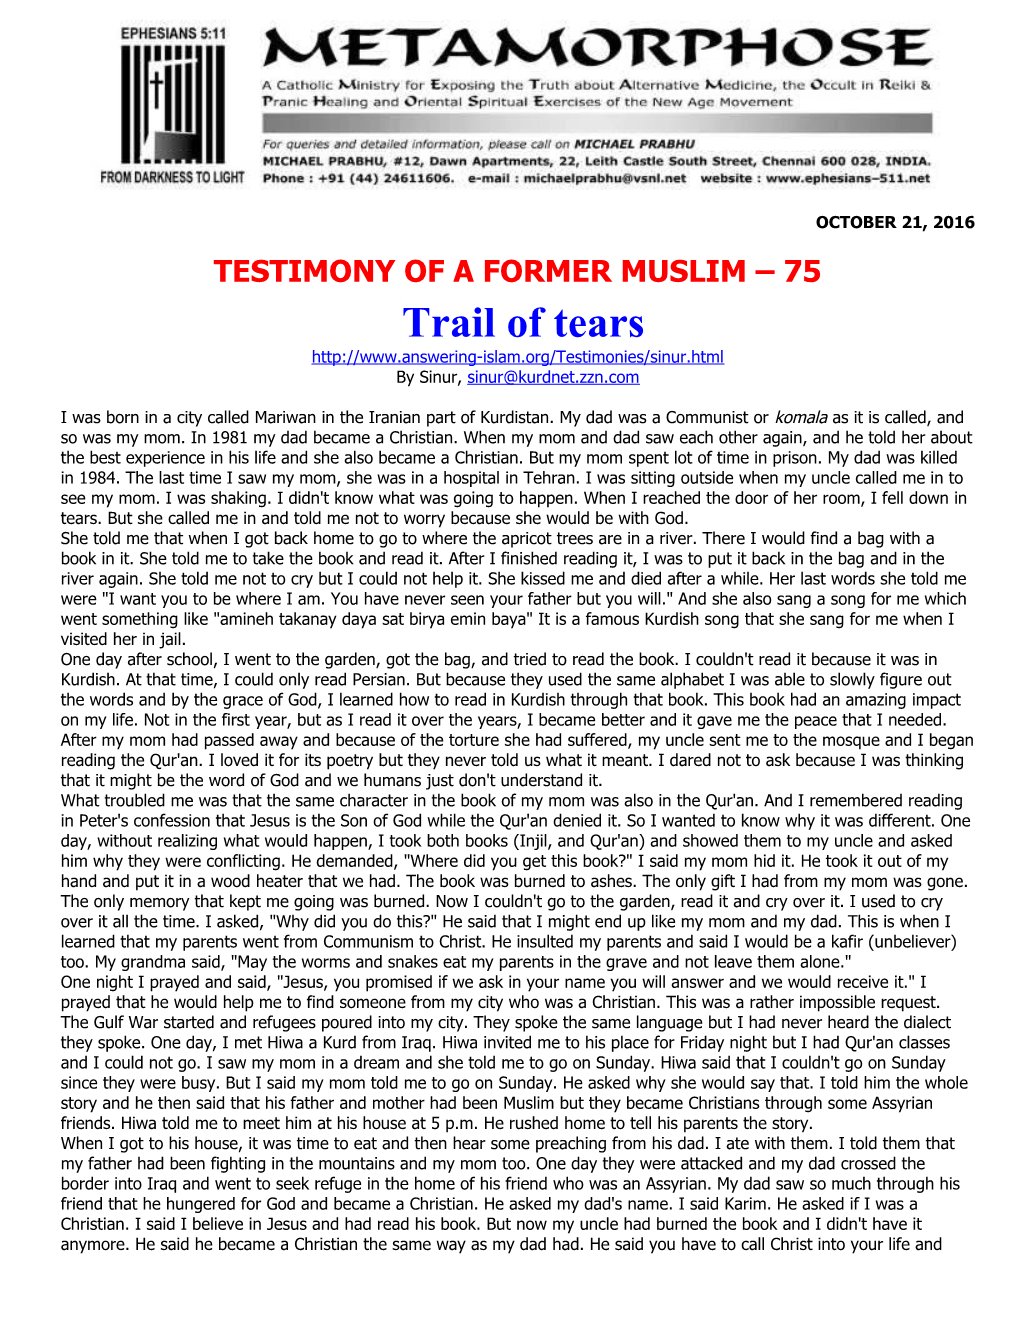 Testimony of a Former Muslim 75